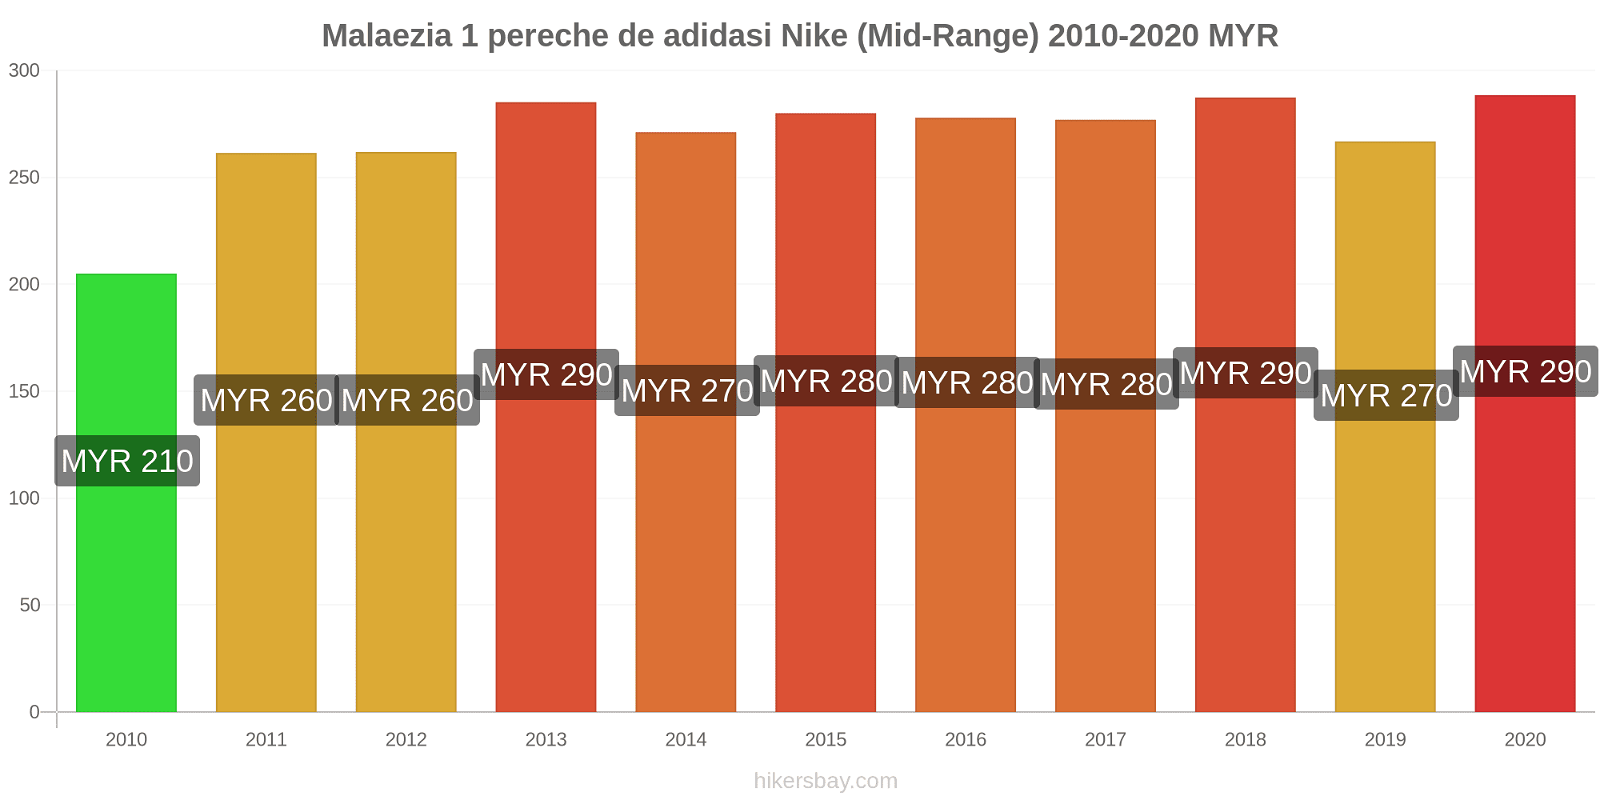 Malaezia modificări de preț 1 pereche de adidasi Nike (Mid-Range) hikersbay.com